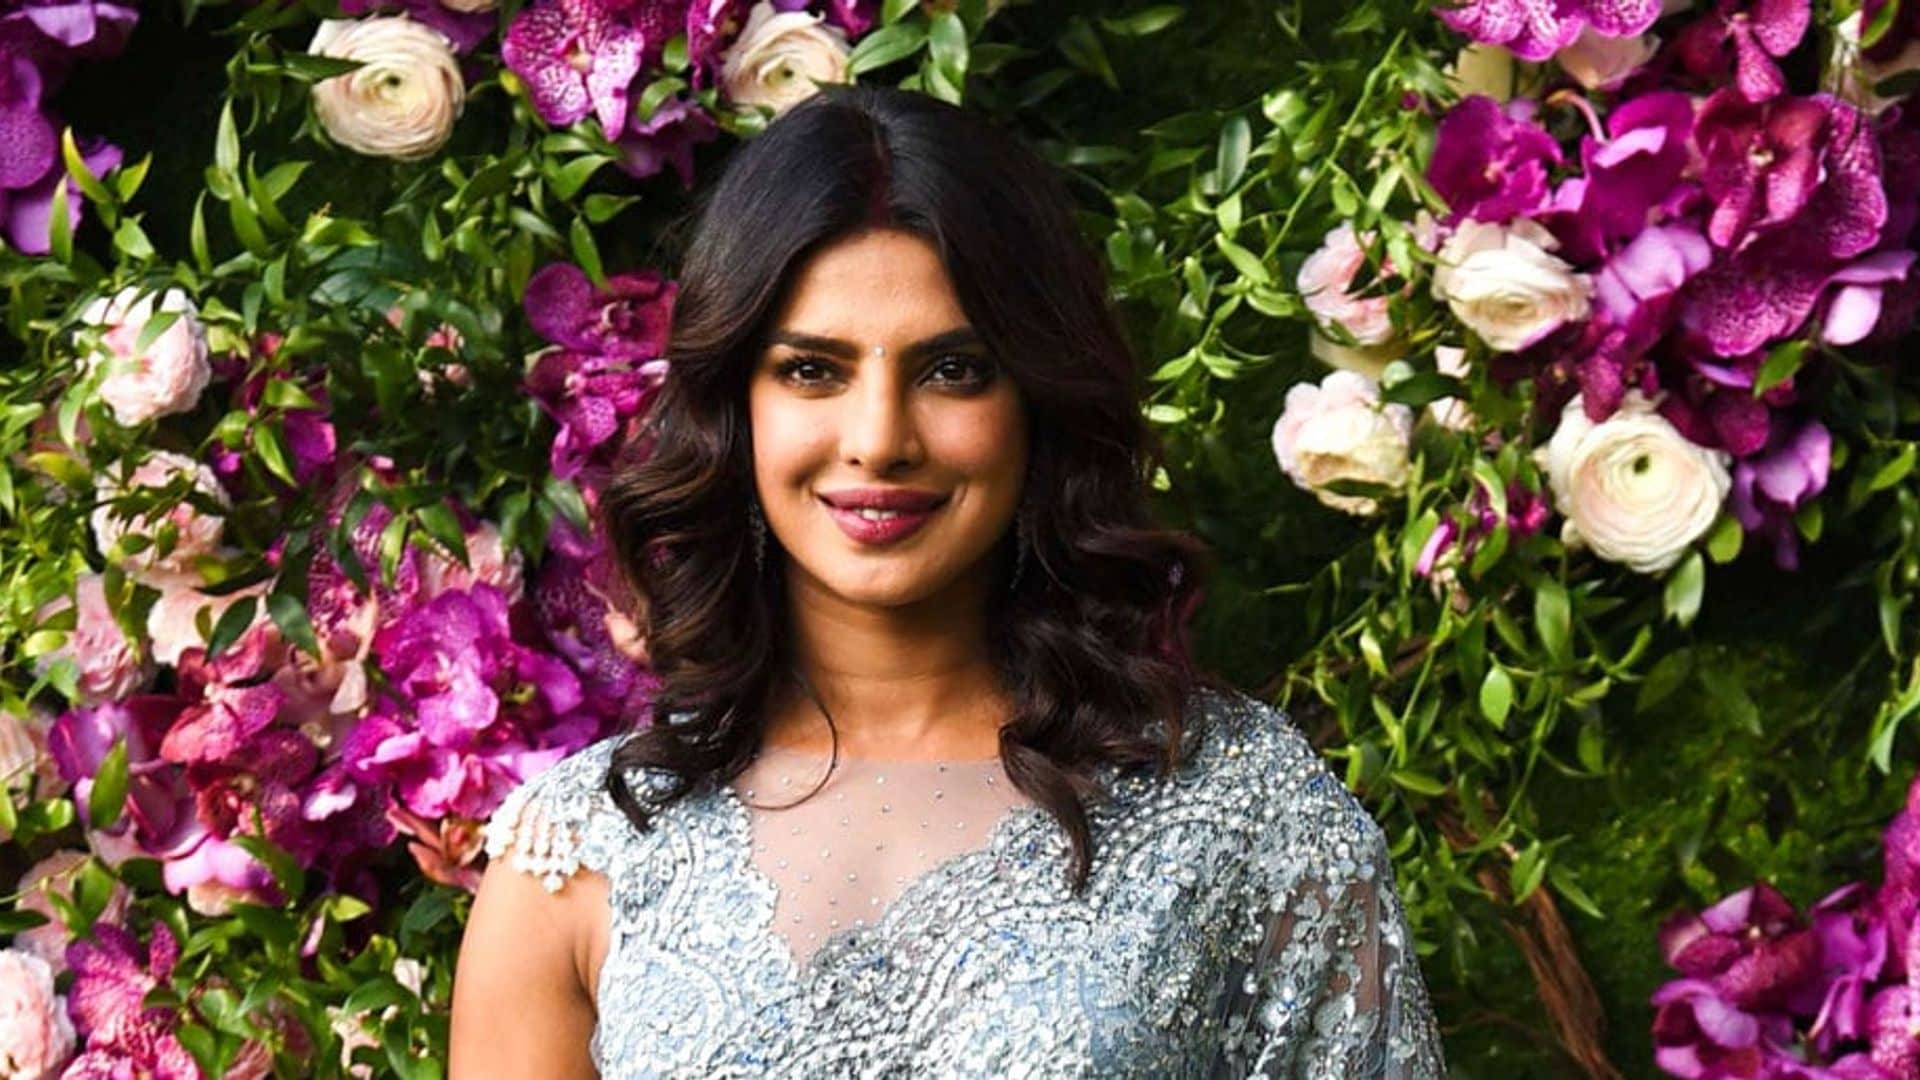 Priyanka Chopra's custom Ralph Lauren dress takes center stage once again